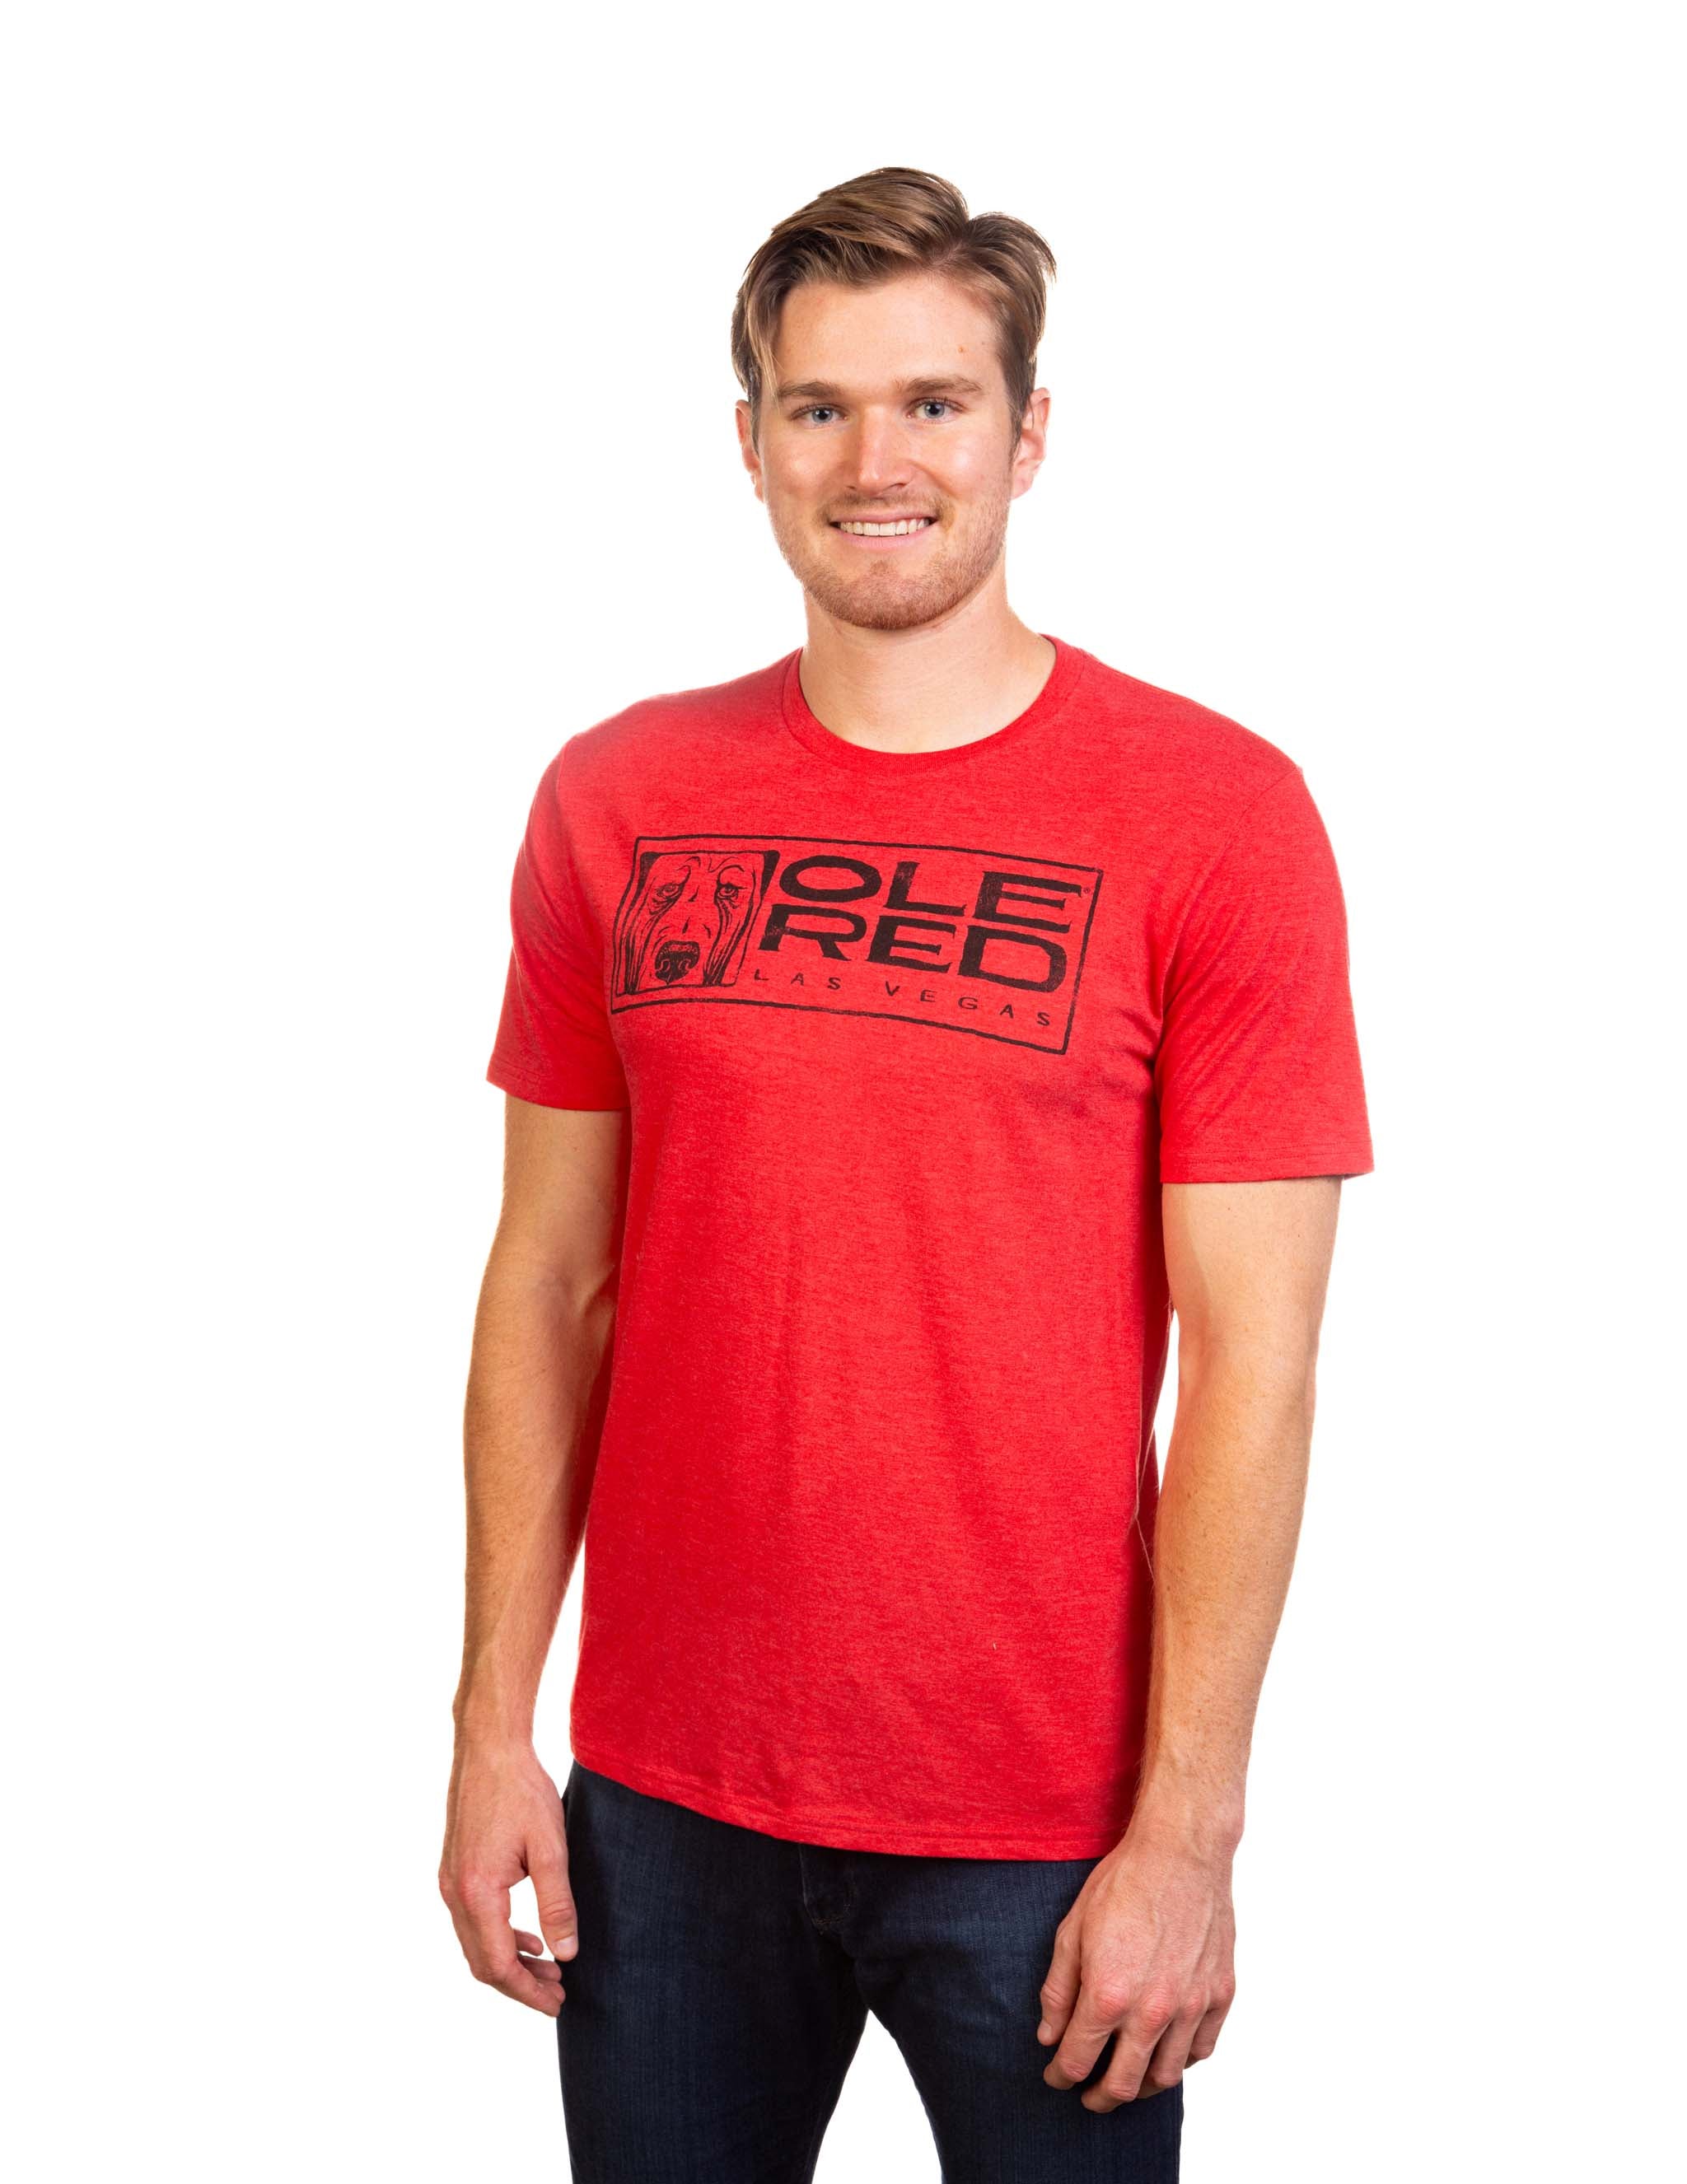 Ole Red Vegas Logo T-Shirt